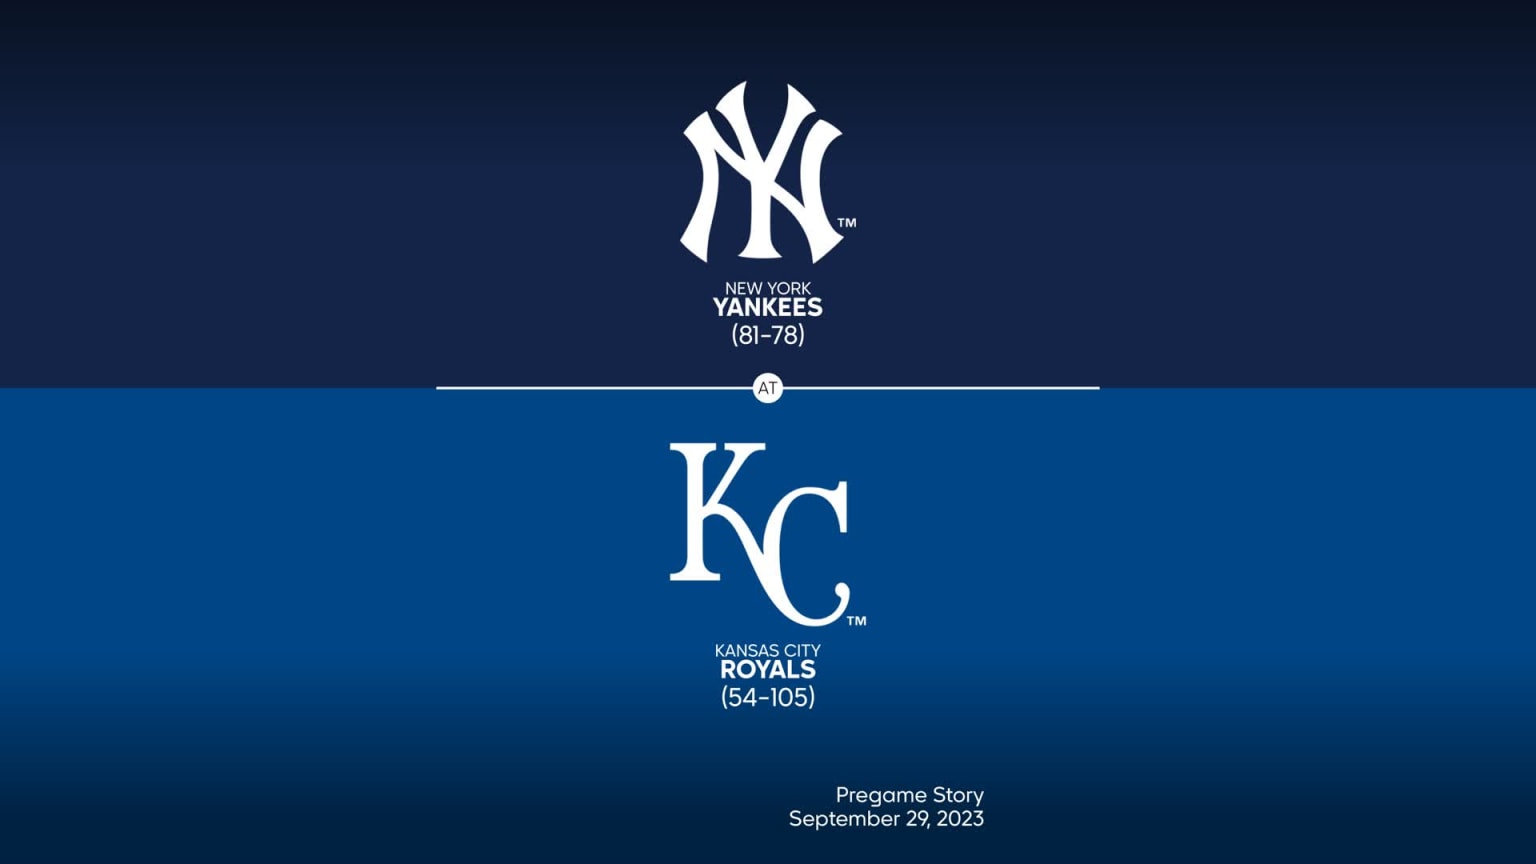 Royals vs. Yankees Tickets